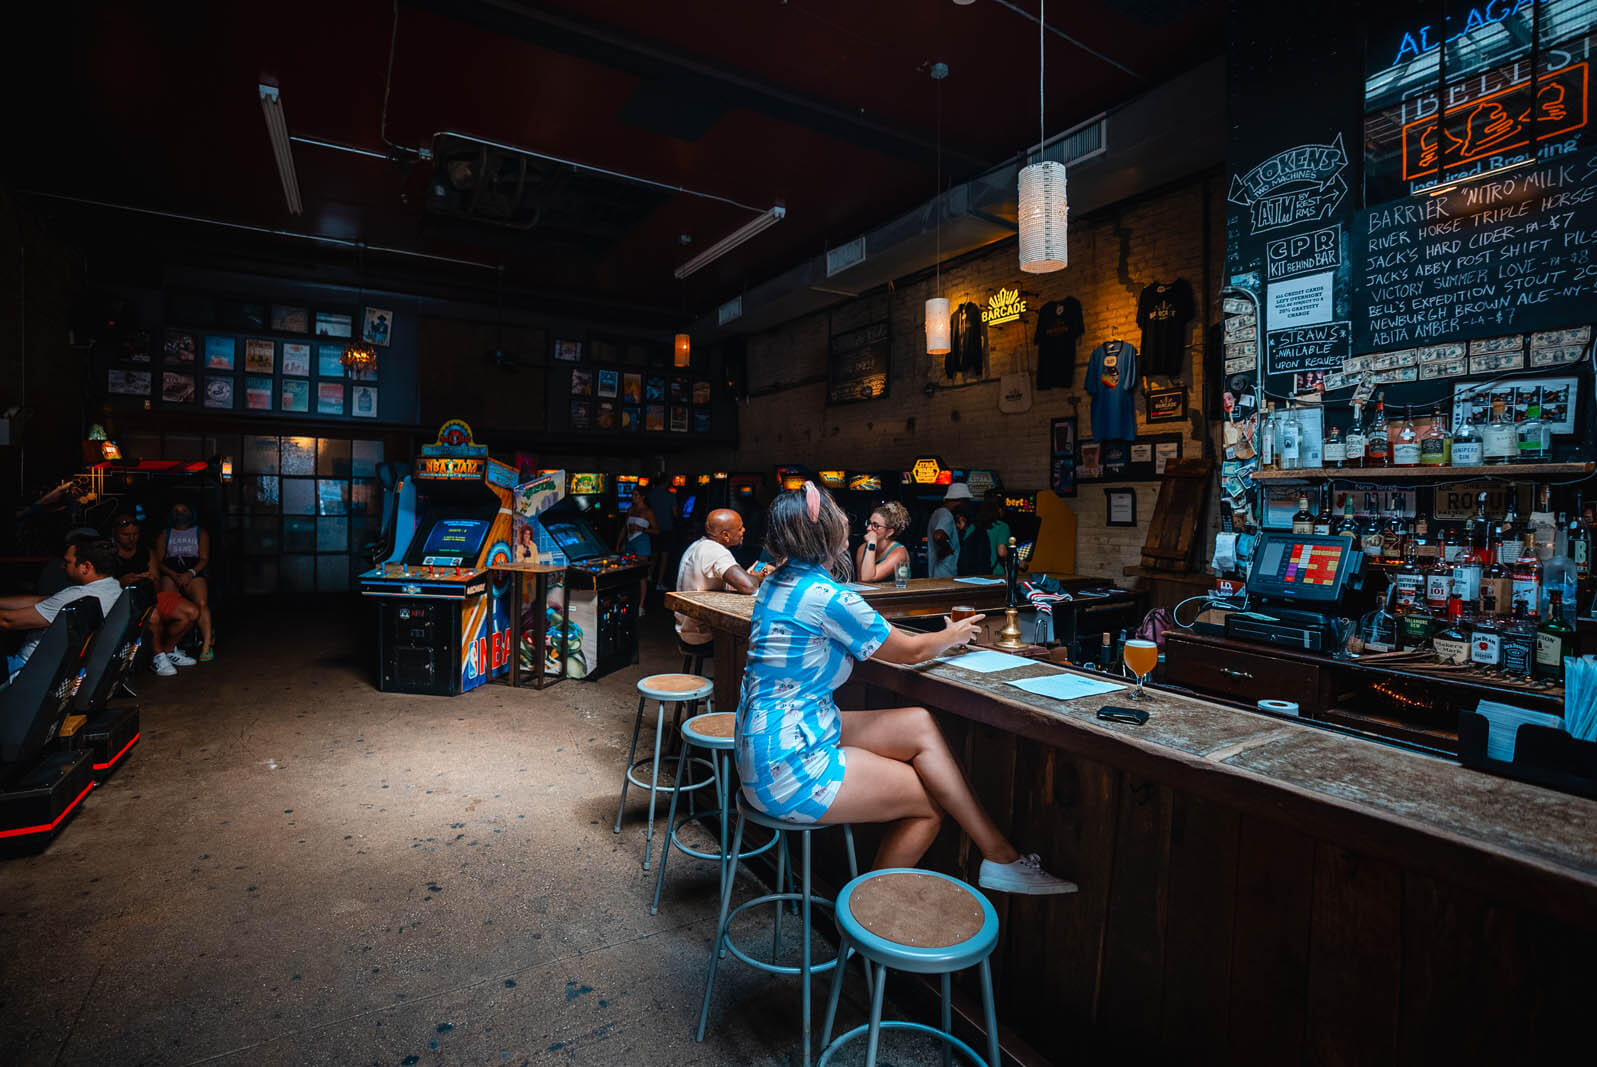 Barcade bar and arcade in Williamsburg Brooklyn